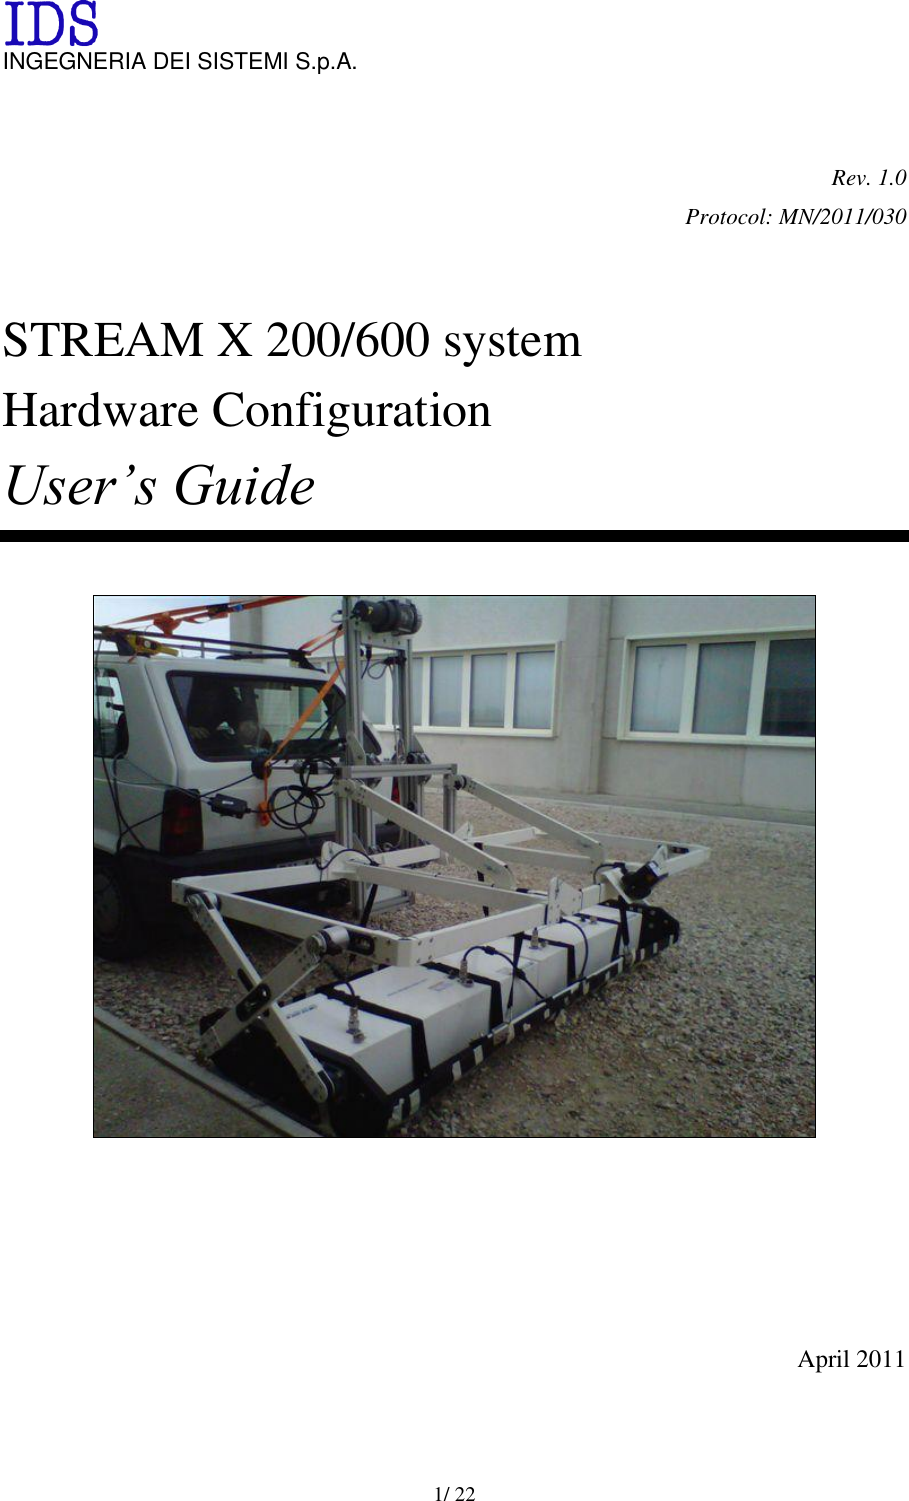   1/ 22   INGEGNERIA DEI SISTEMI S.p.A.   Rev. 1.0 Protocol: MN/2011/030   STREAM X 200/600 system Hardware Configuration User’s Guide        April 2011 